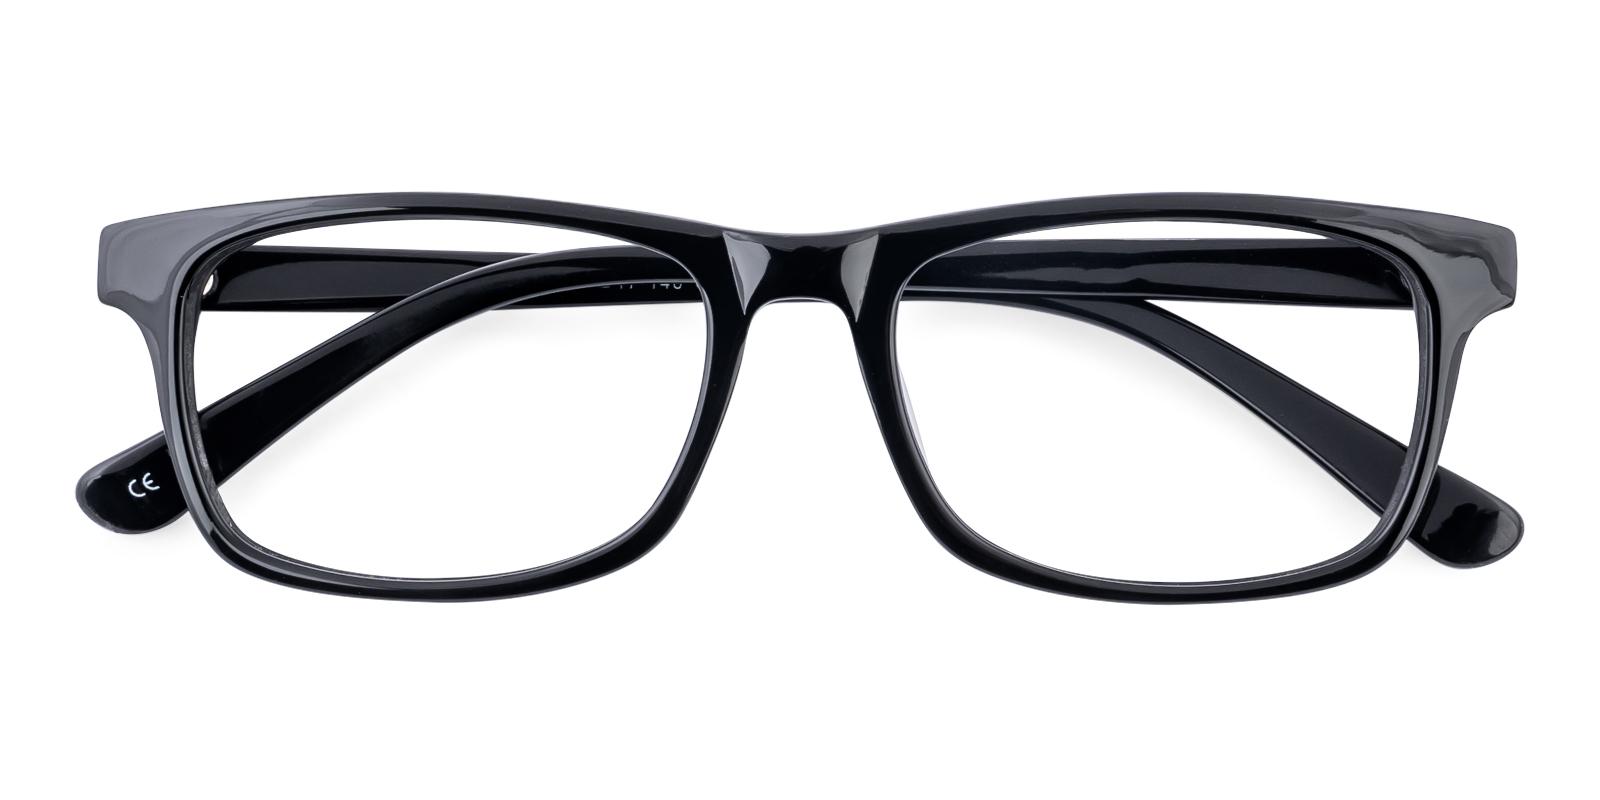 Seemth Black Acetate Eyeglasses , UniversalBridgeFit Frames from ABBE Glasses